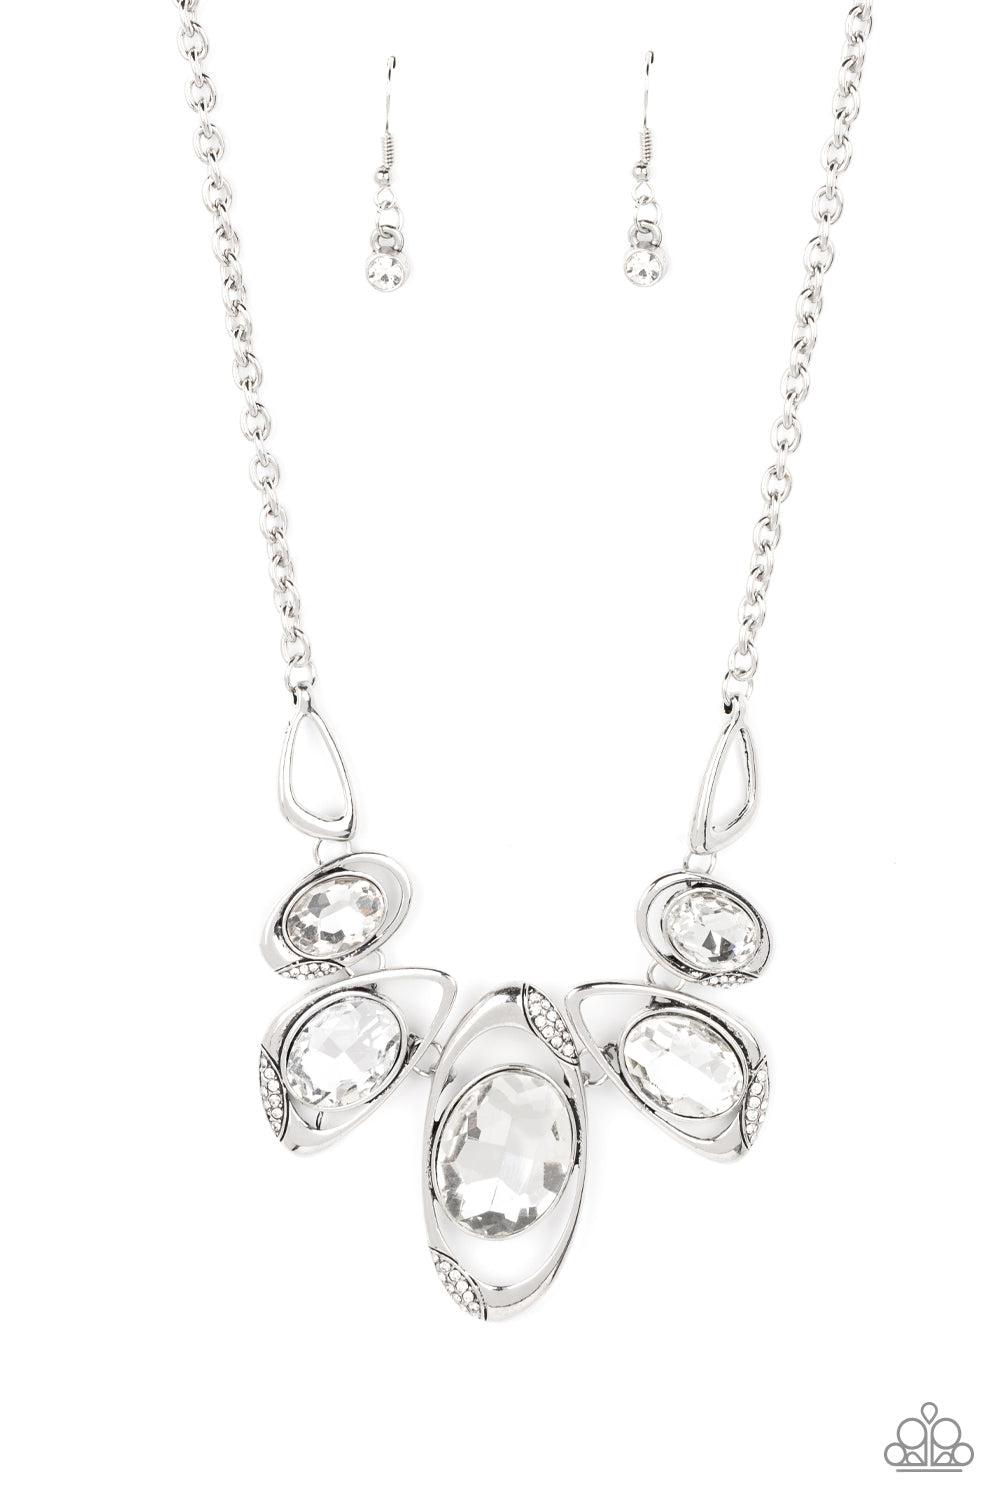 Hypnotic Twinkle White Rhinestone Necklace - Paparazzi Accessories- lightbox - CarasShop.com - $5 Jewelry by Cara Jewels